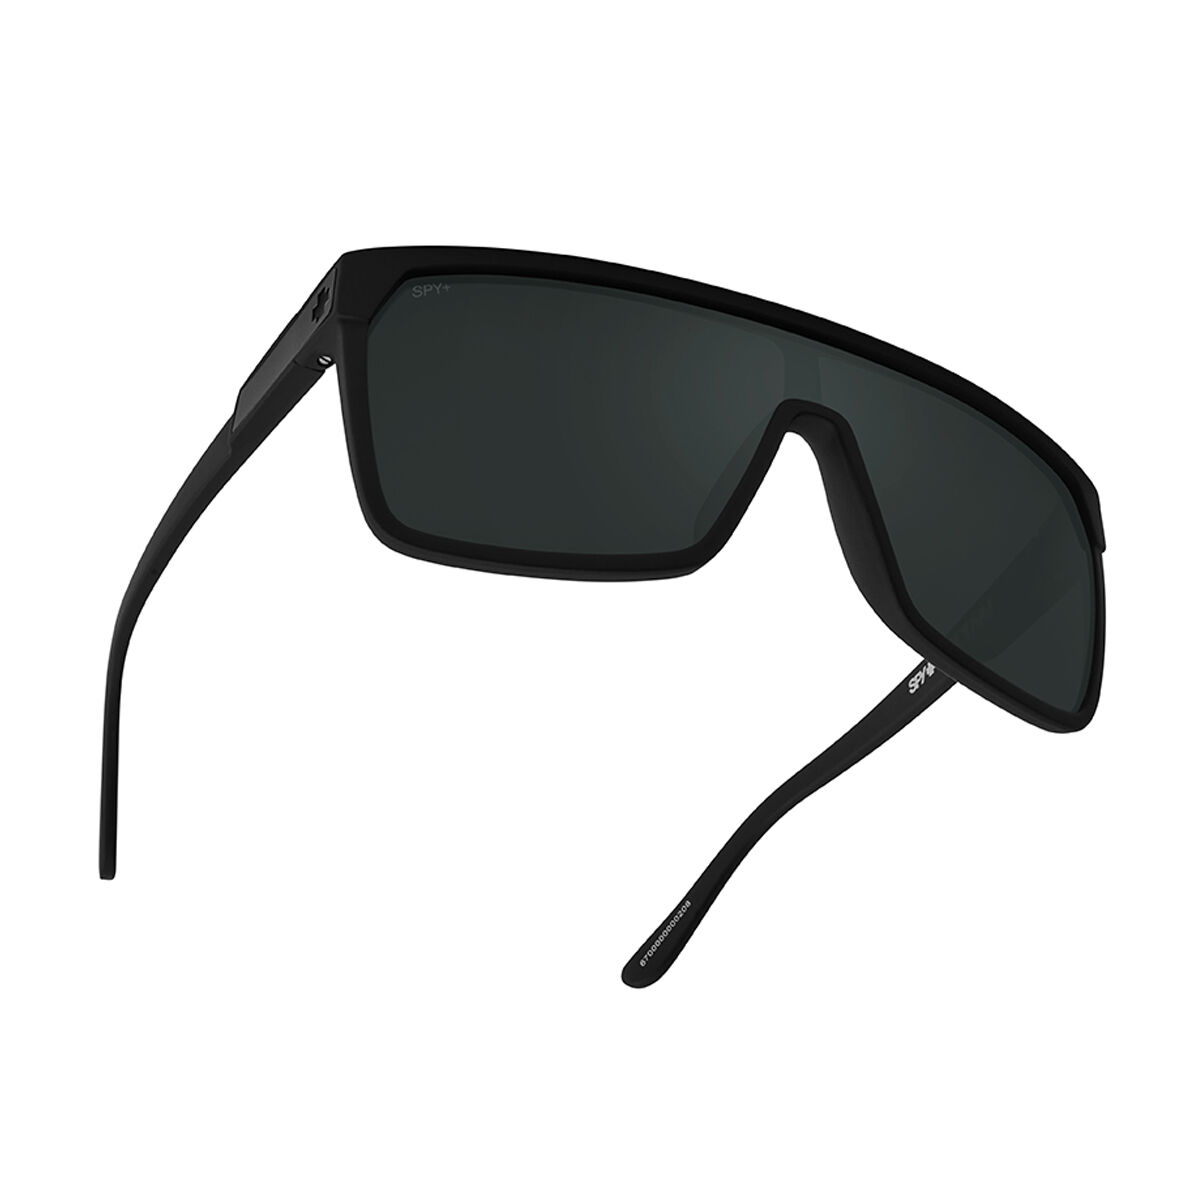 FLYNN Mens Sunglasses by Spy Optic